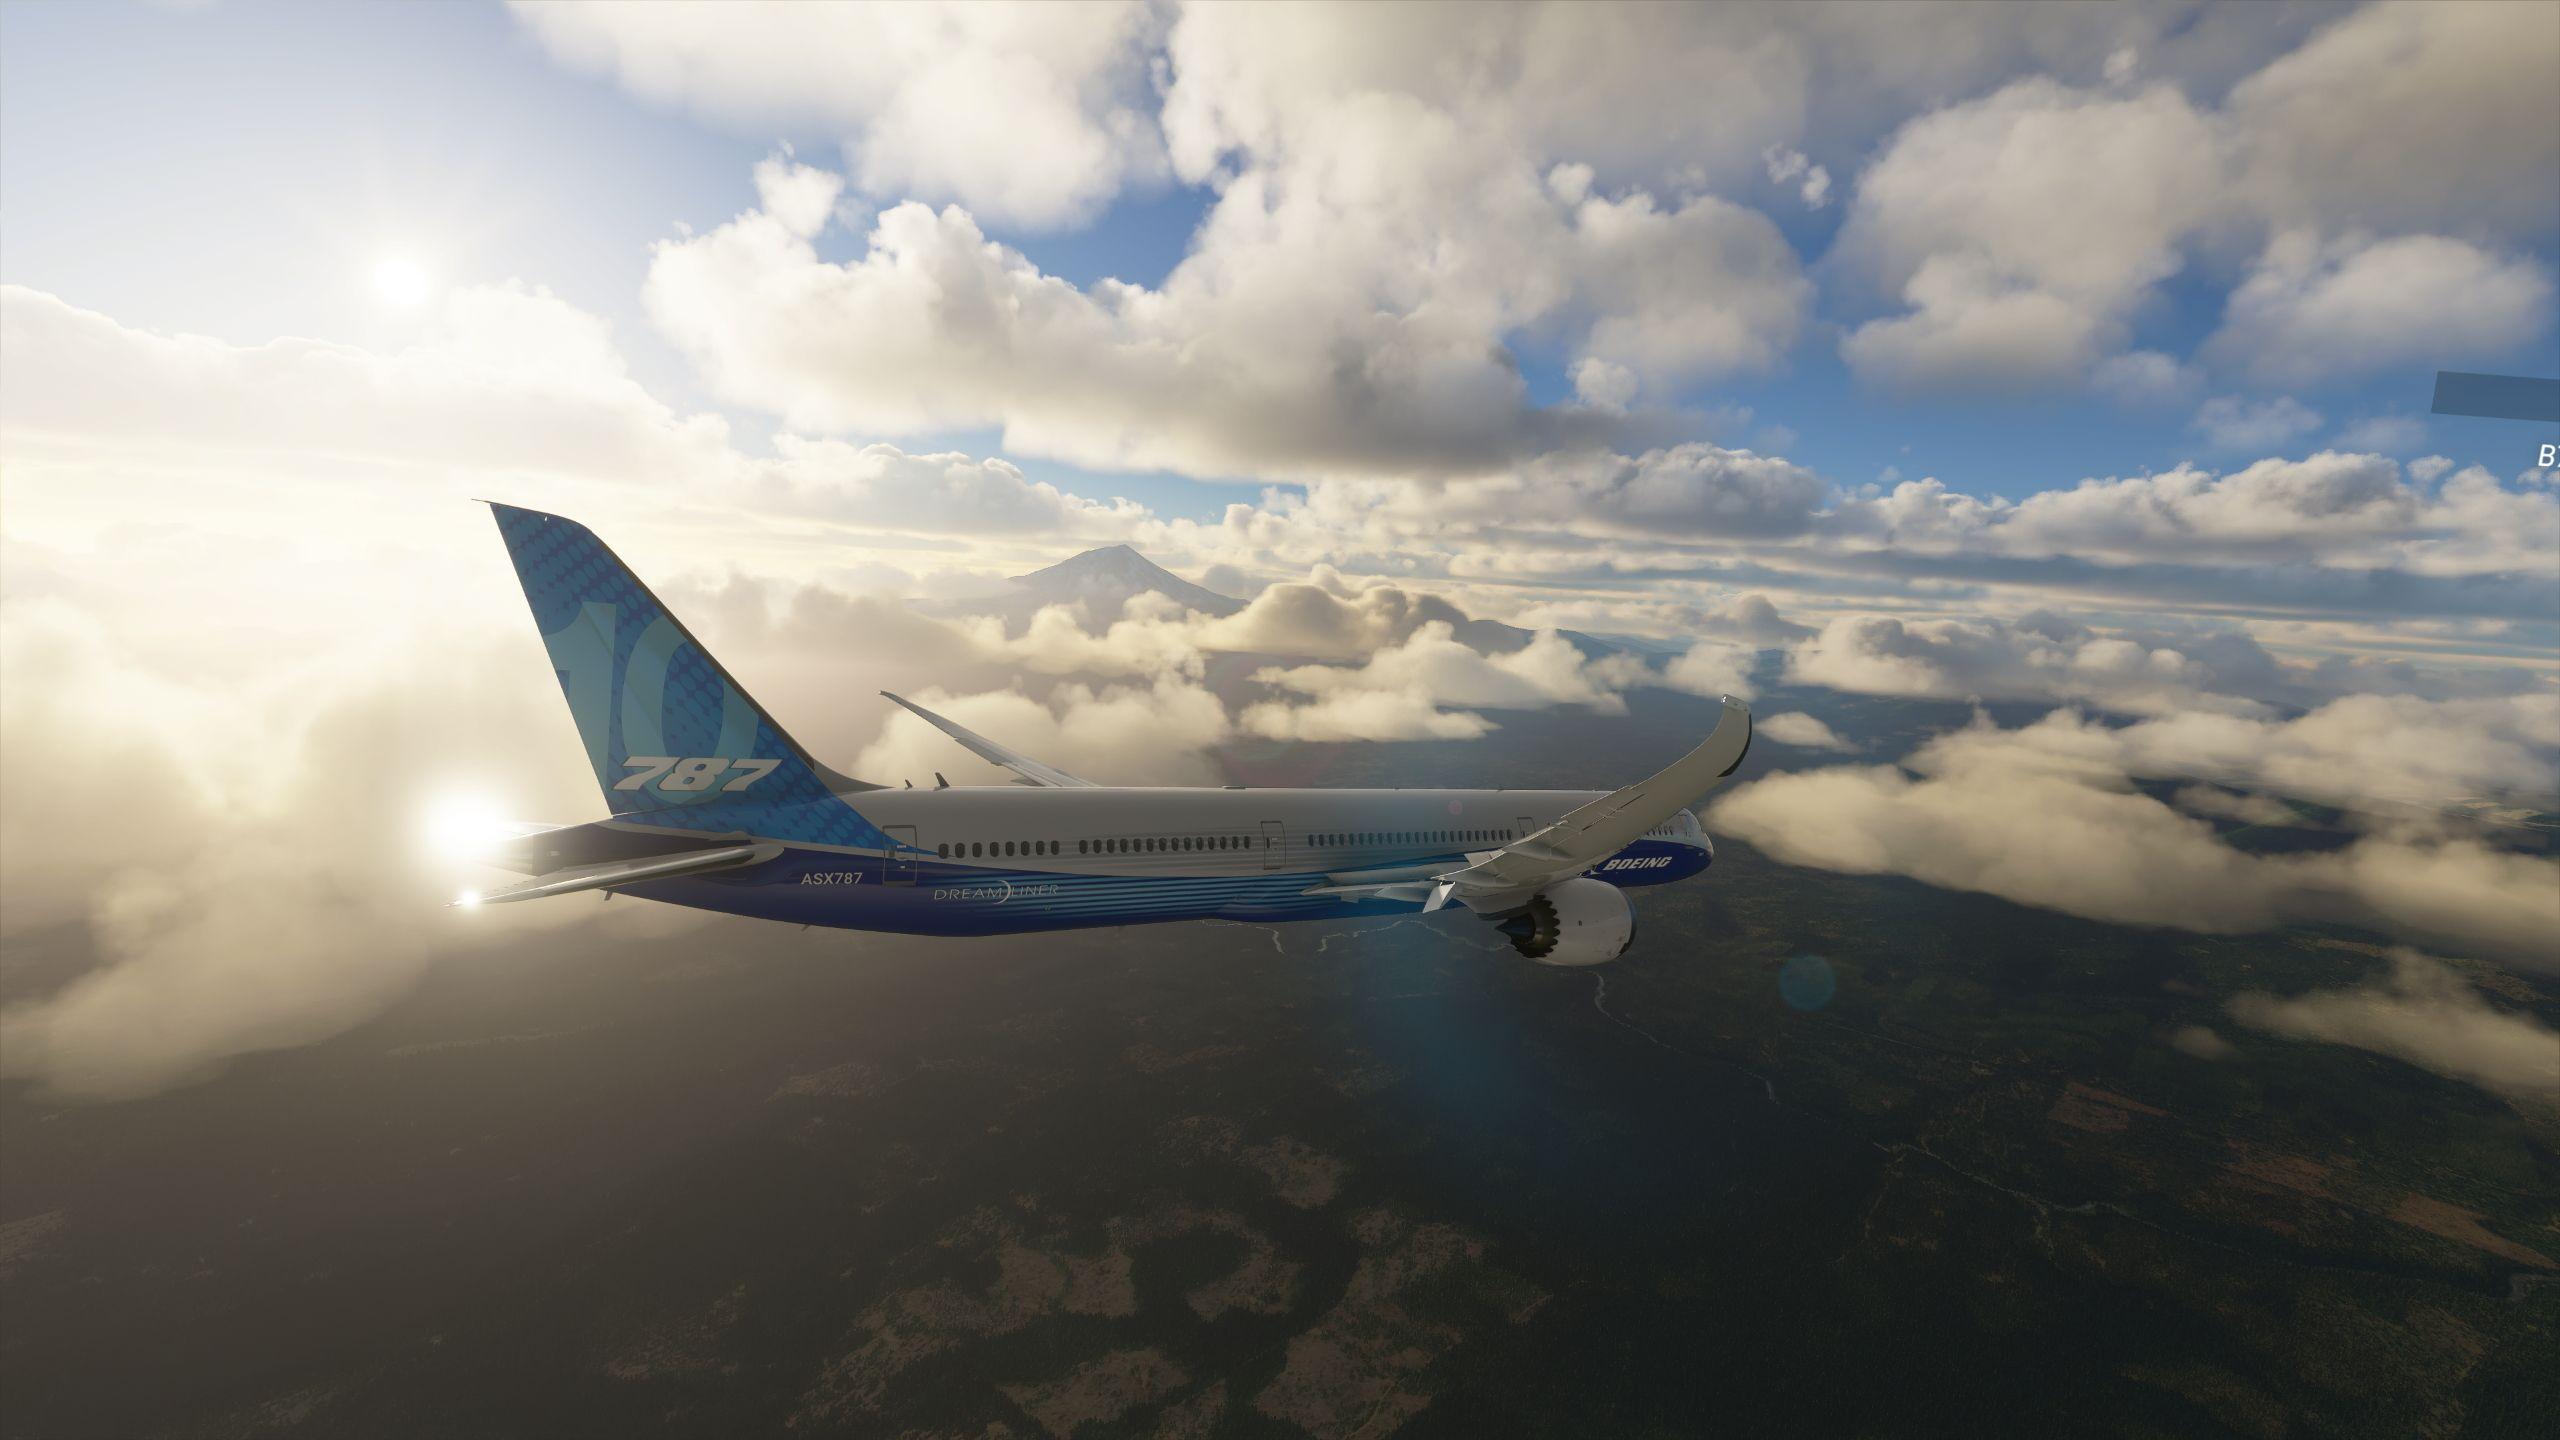 Microsoft Flight Simulator Wallpapers Top Free Microsoft Flight